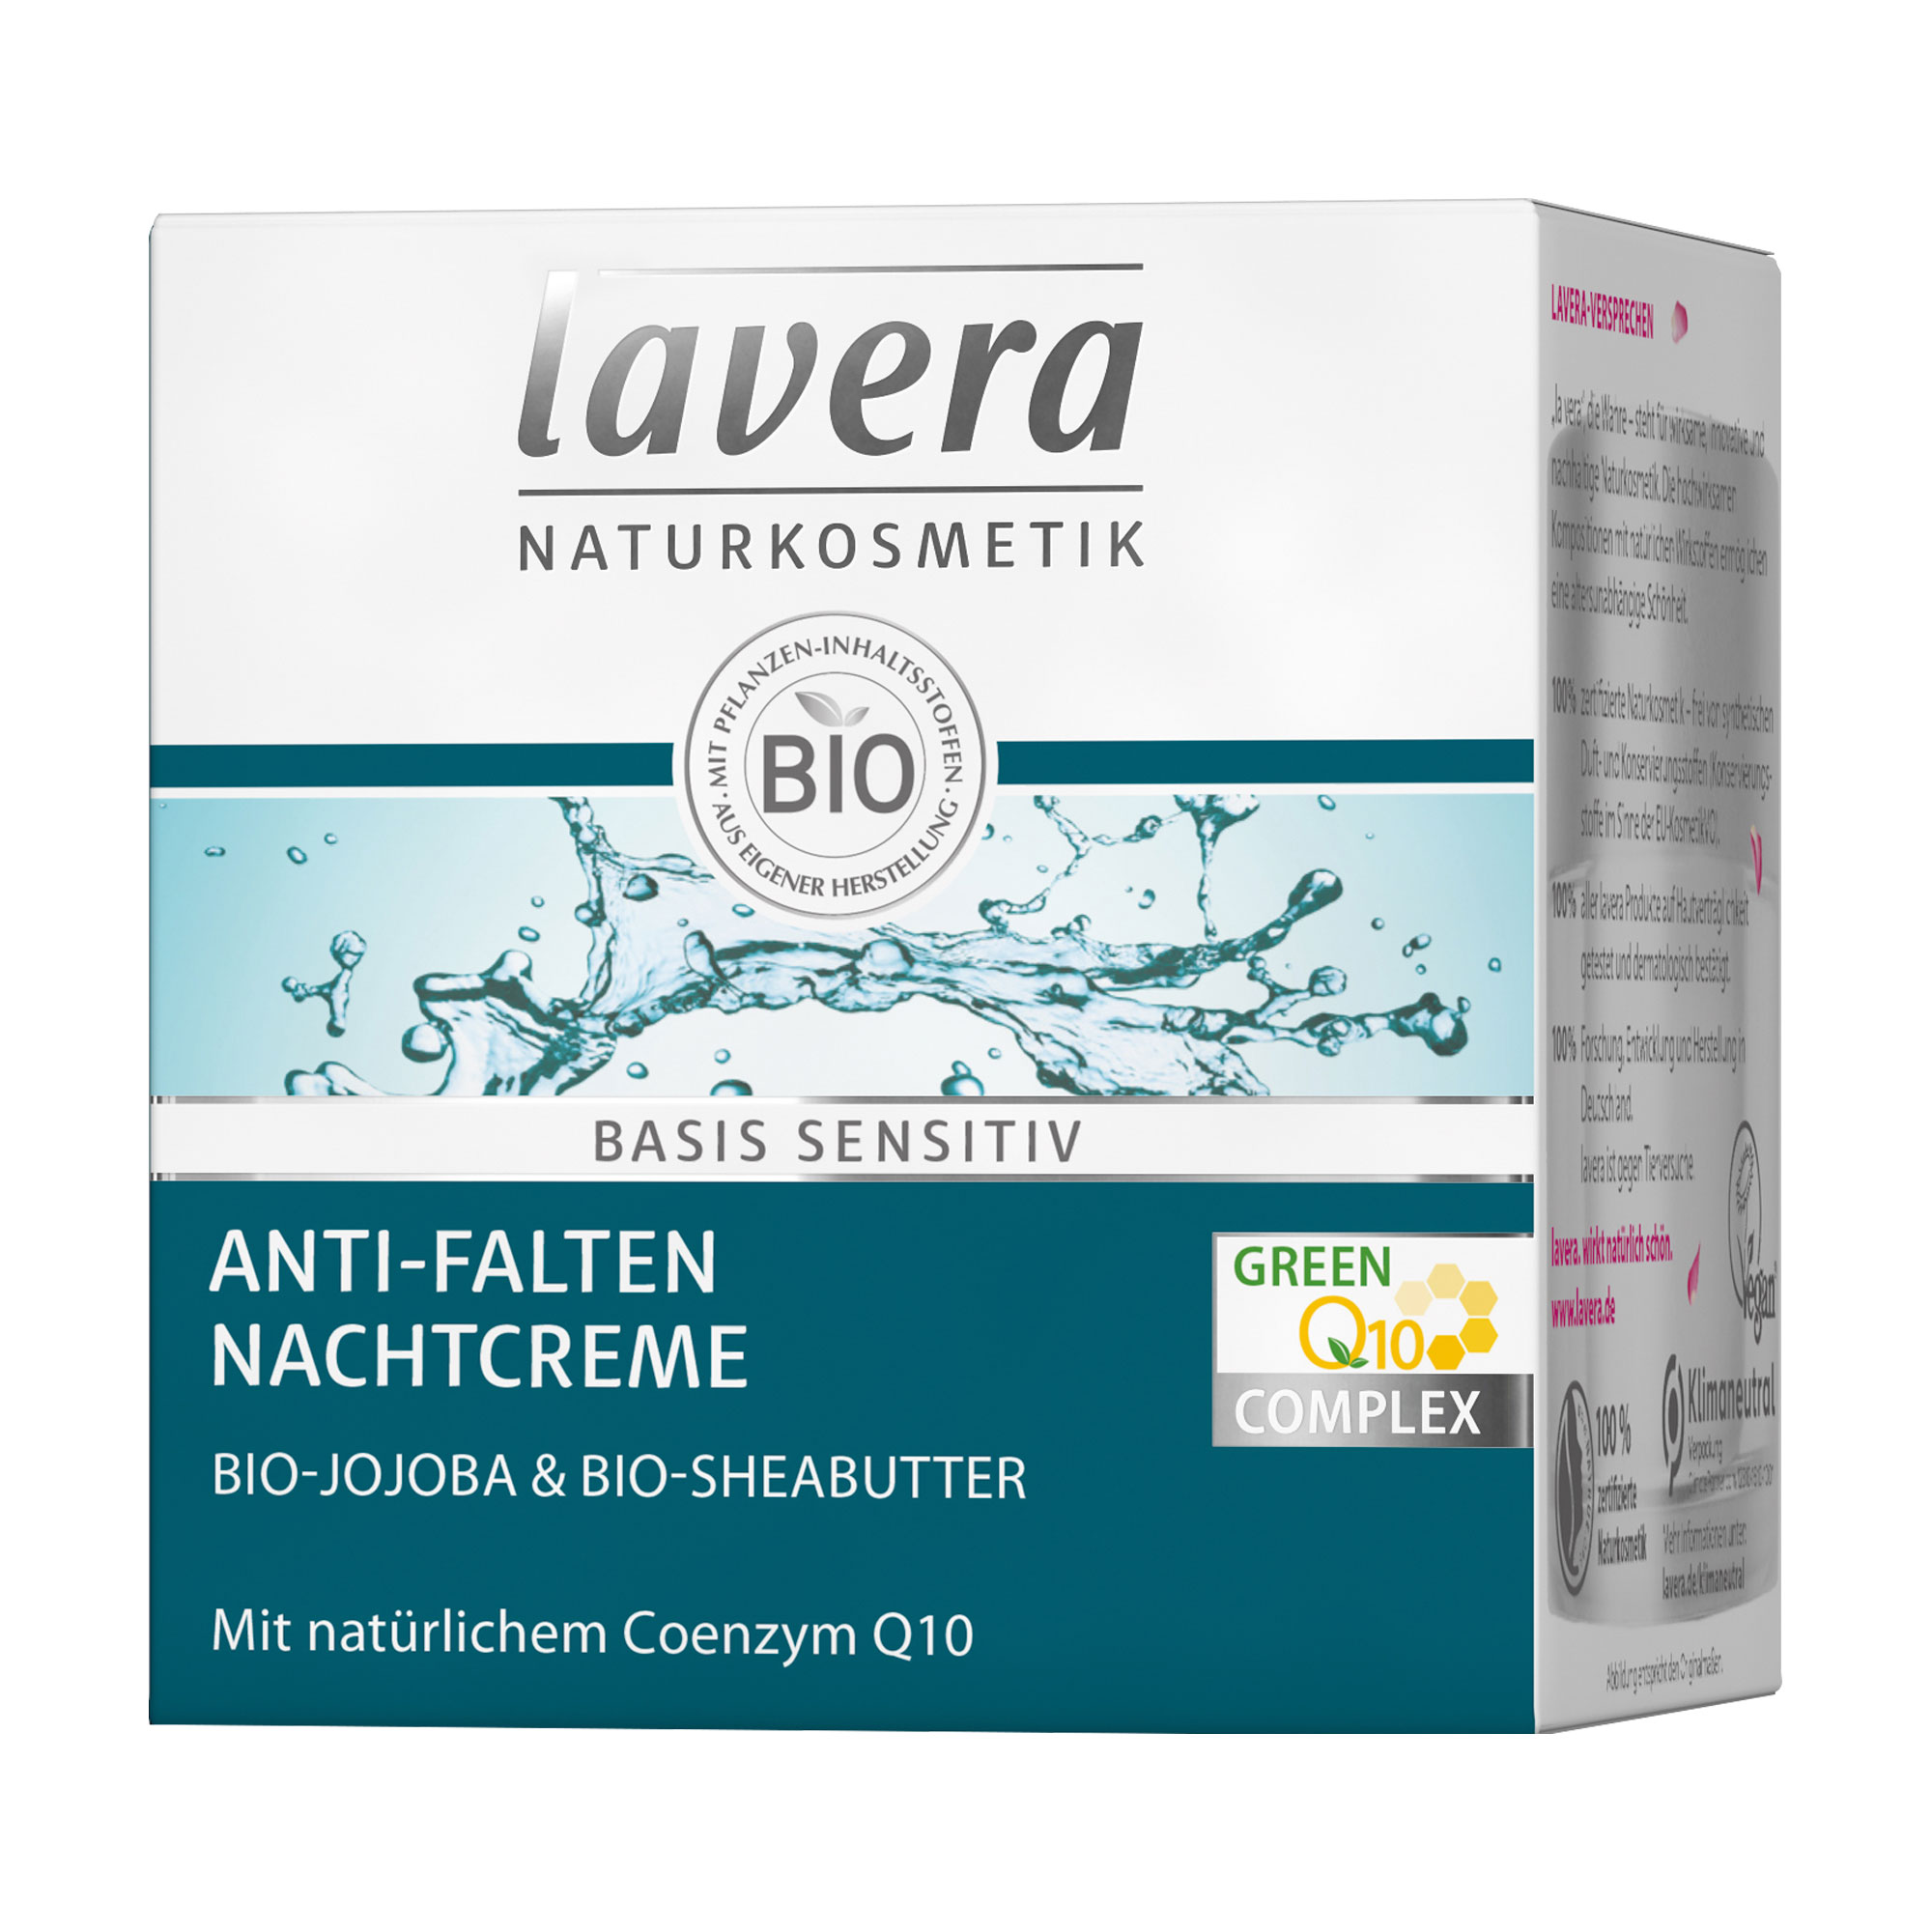 Lavera Basis Sensitiv Anti-Falten Nachtcreme Q10